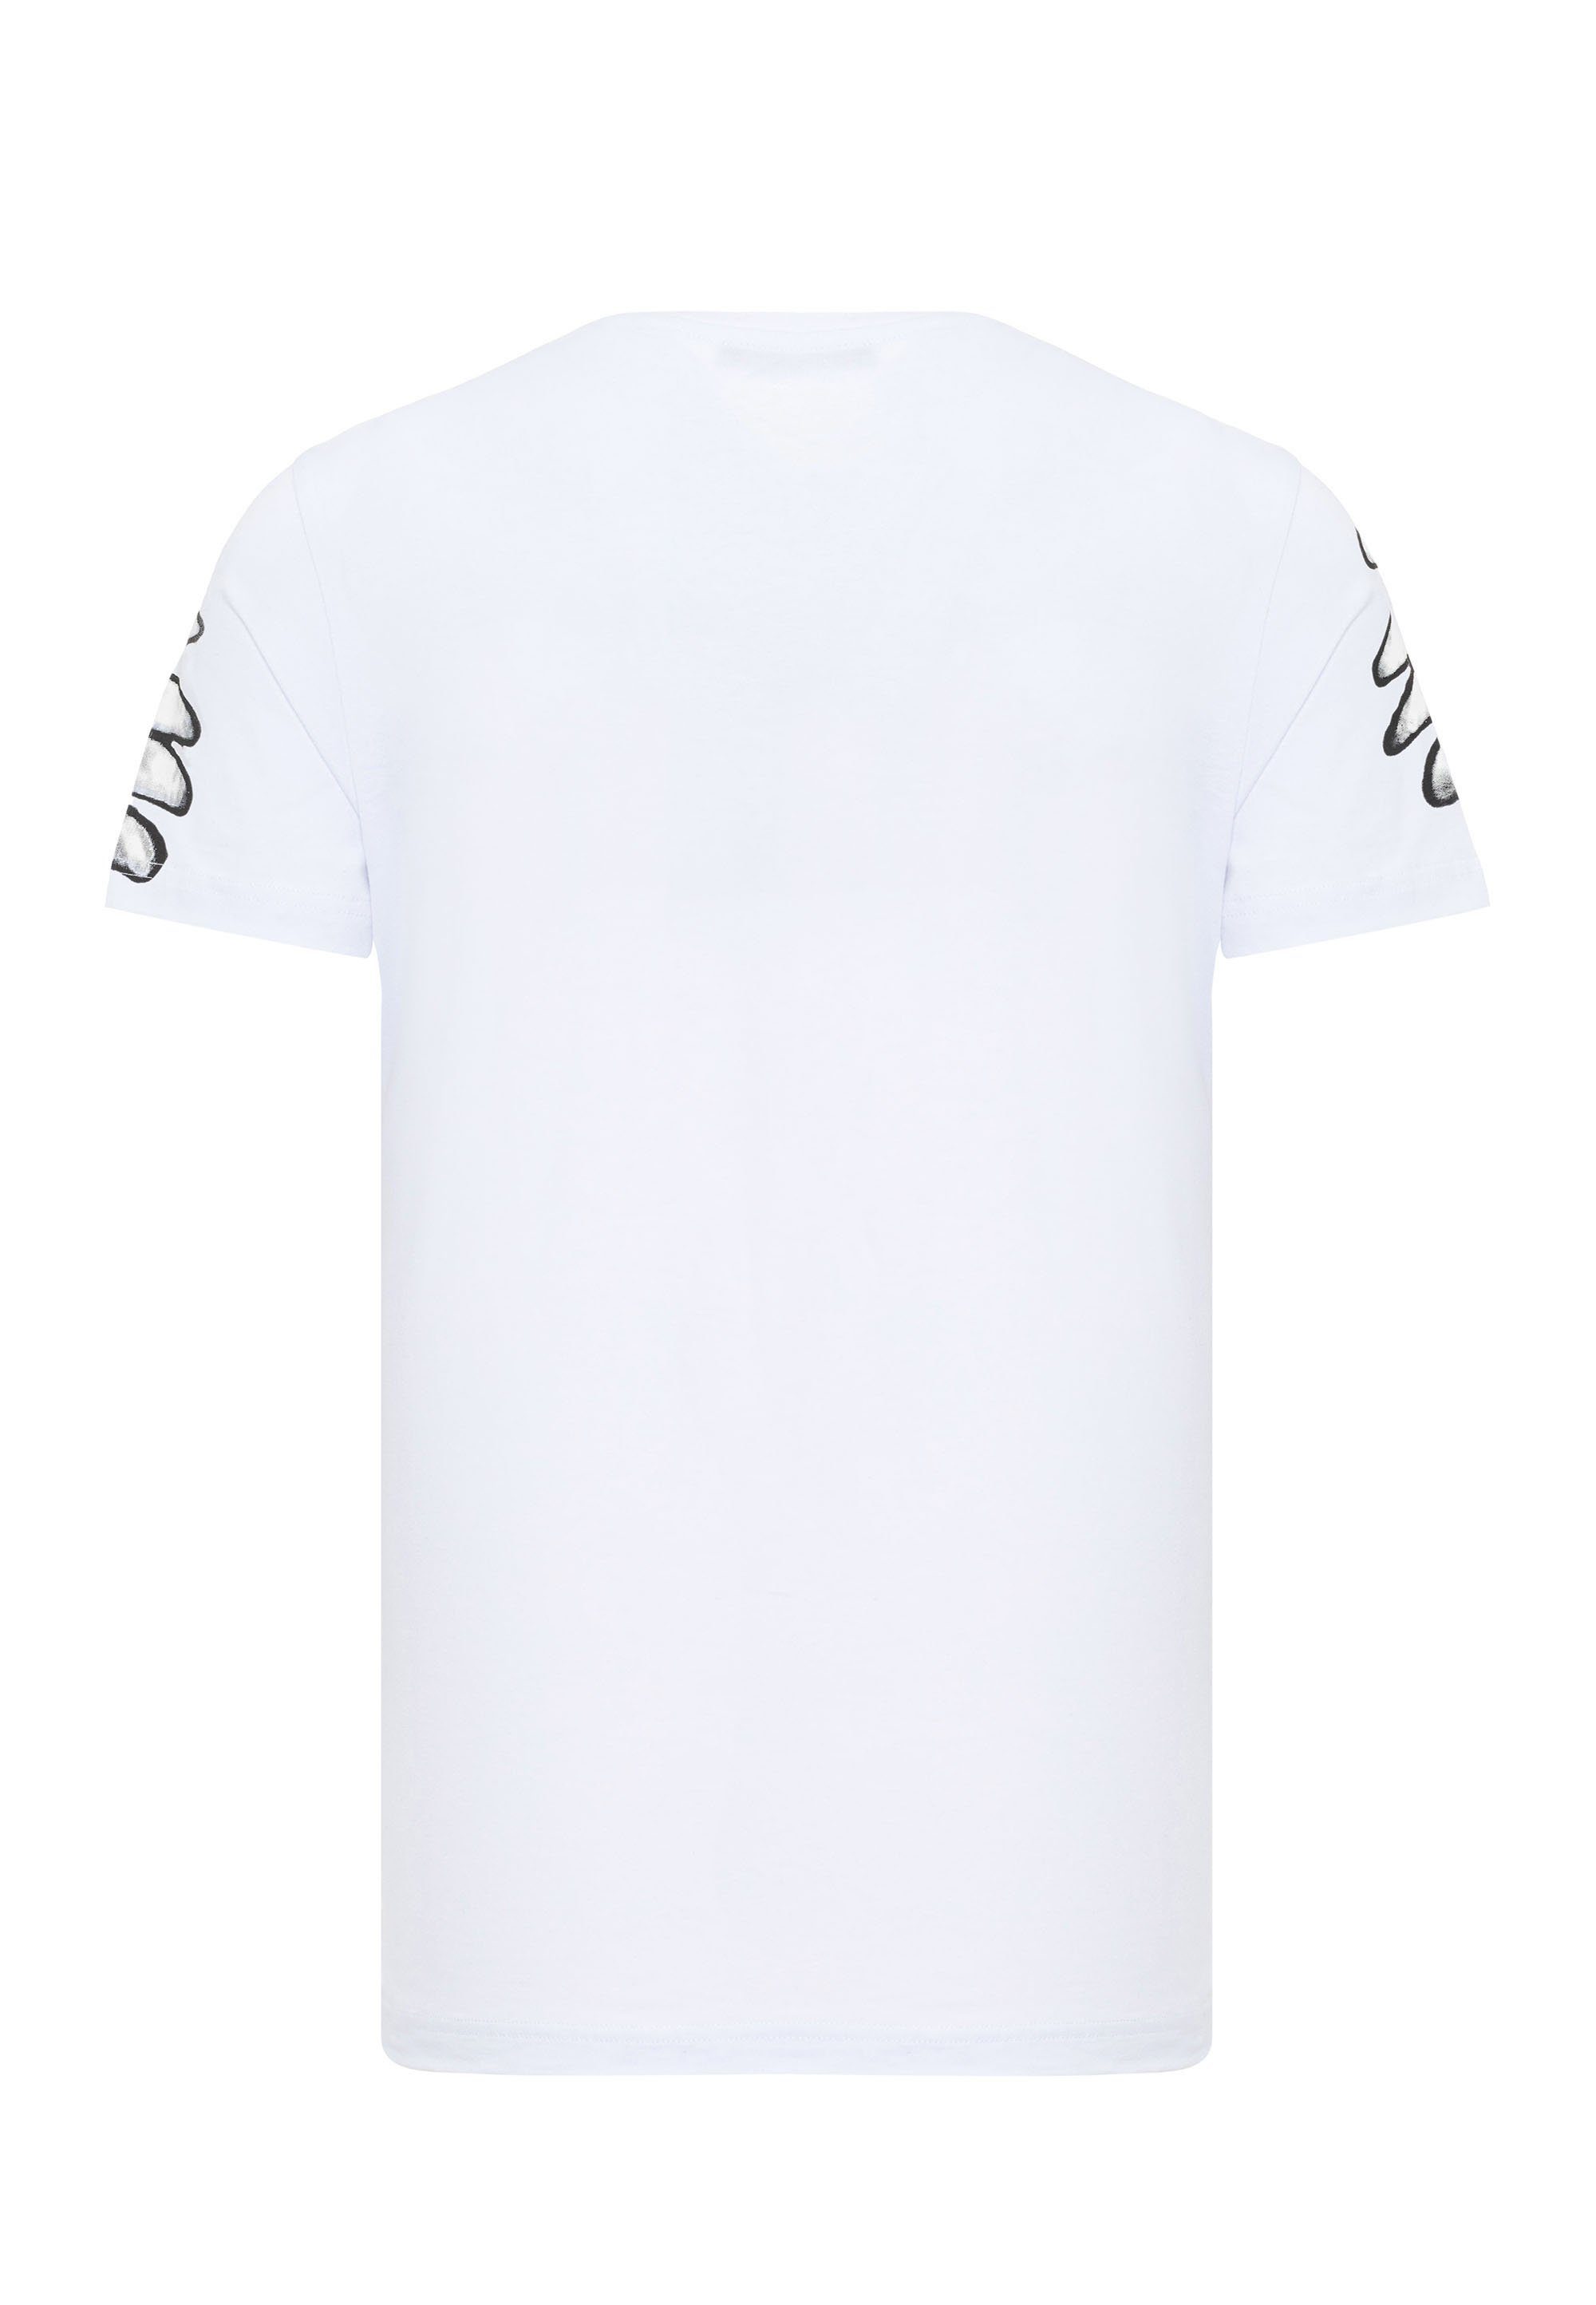 rockigem & Cipo in weiß T-Shirt Look Baxx